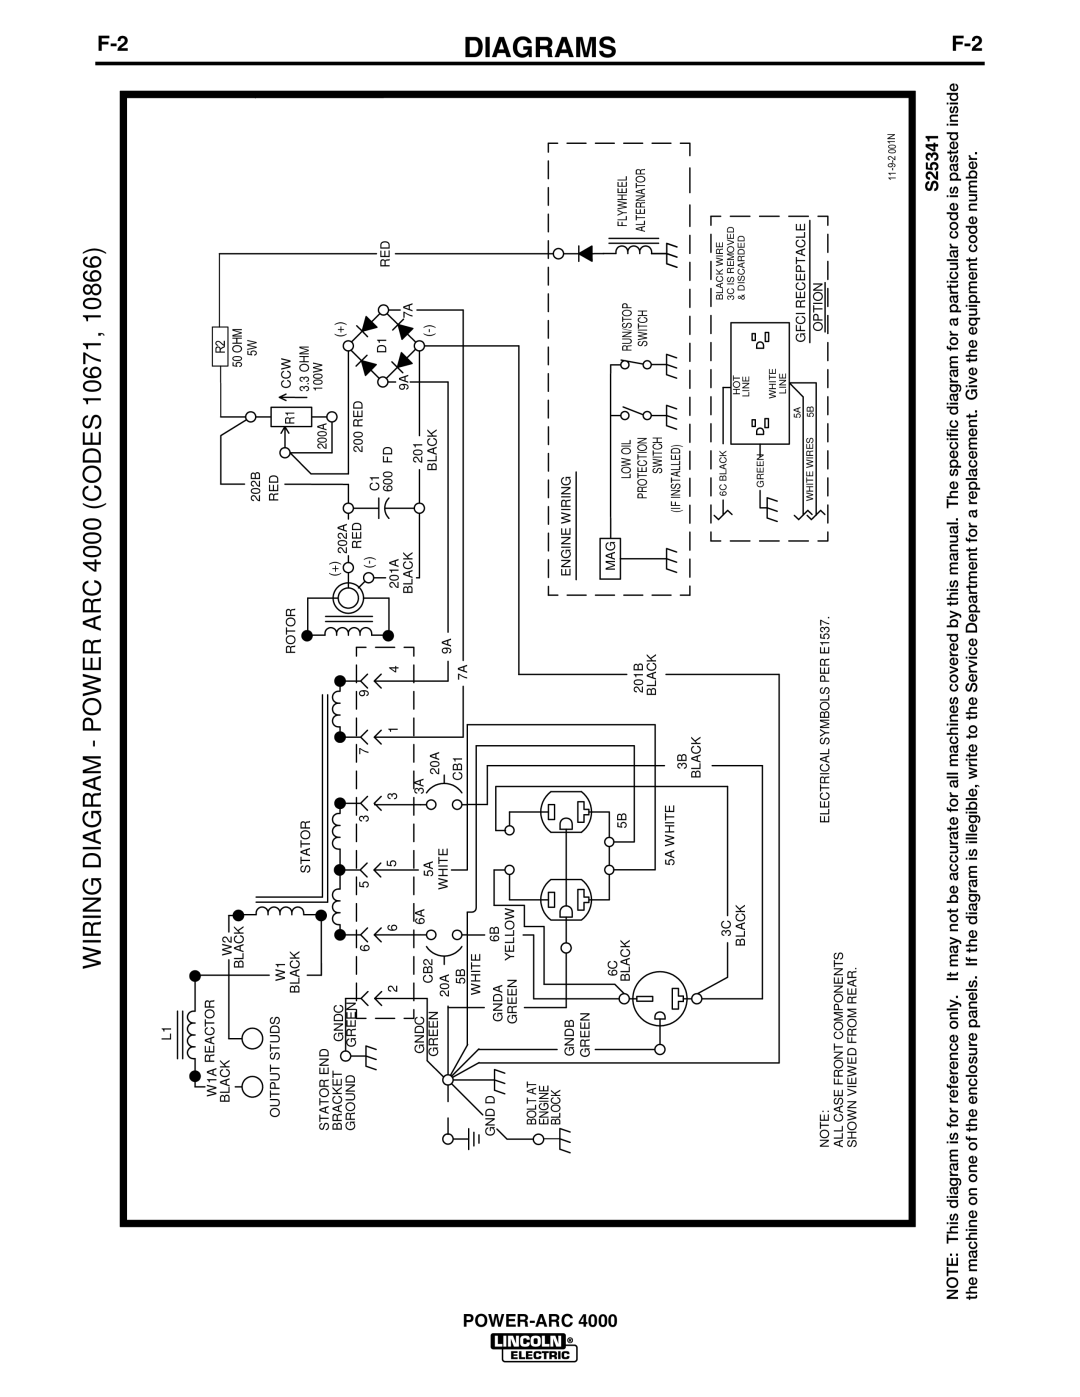 Lincoln POWER-ARC 4000 manual S25341, WIRING DIAGRAM - POWER ARC 4000 CODES 10671, Diagrams 